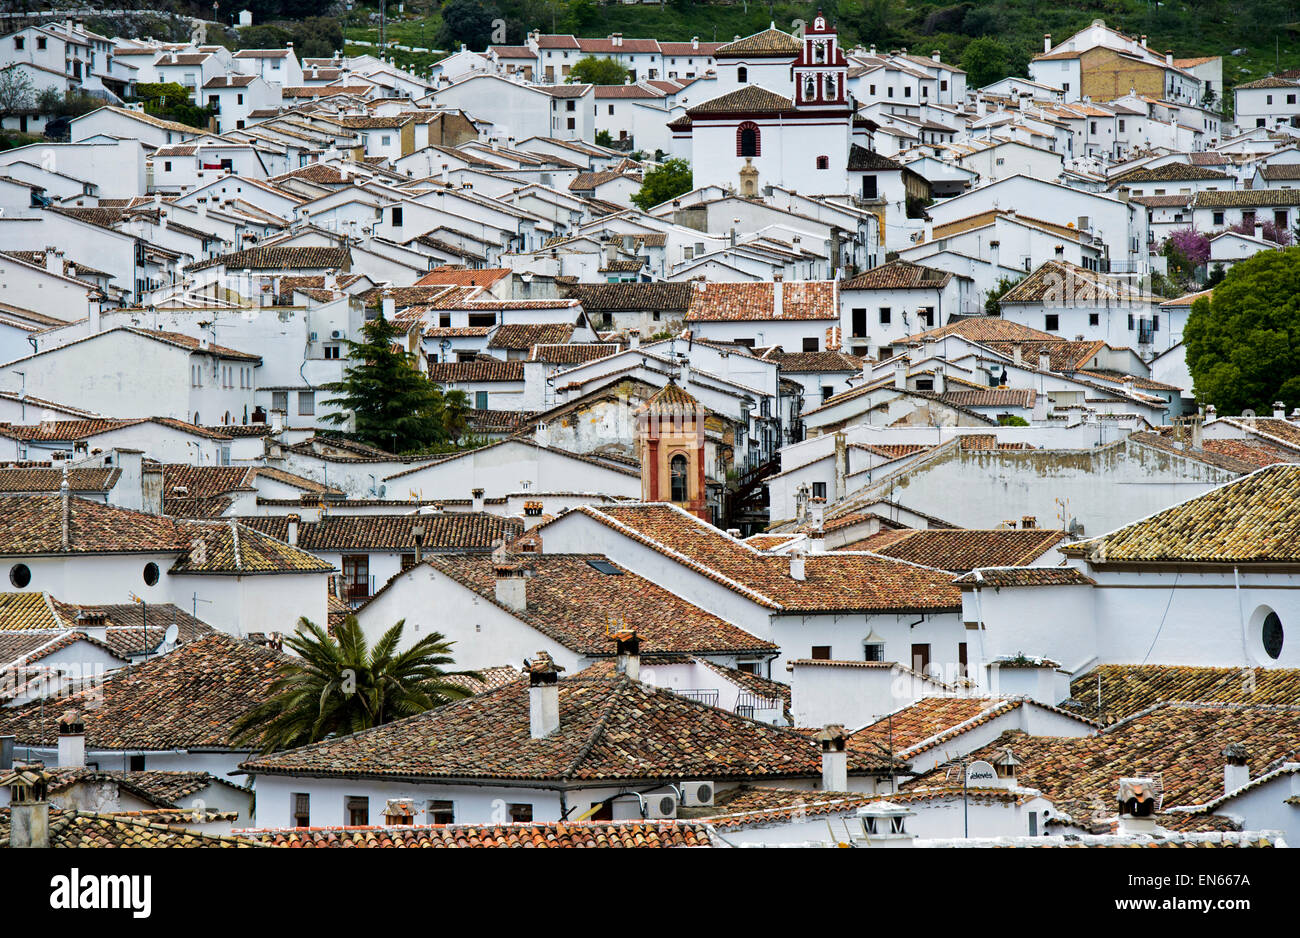 View across the roofs of the White Town, Pueblo Blanco, of Grazalema, Sierra de Grazalema, Cádiz province, Andalusia, Spain Stock Photo